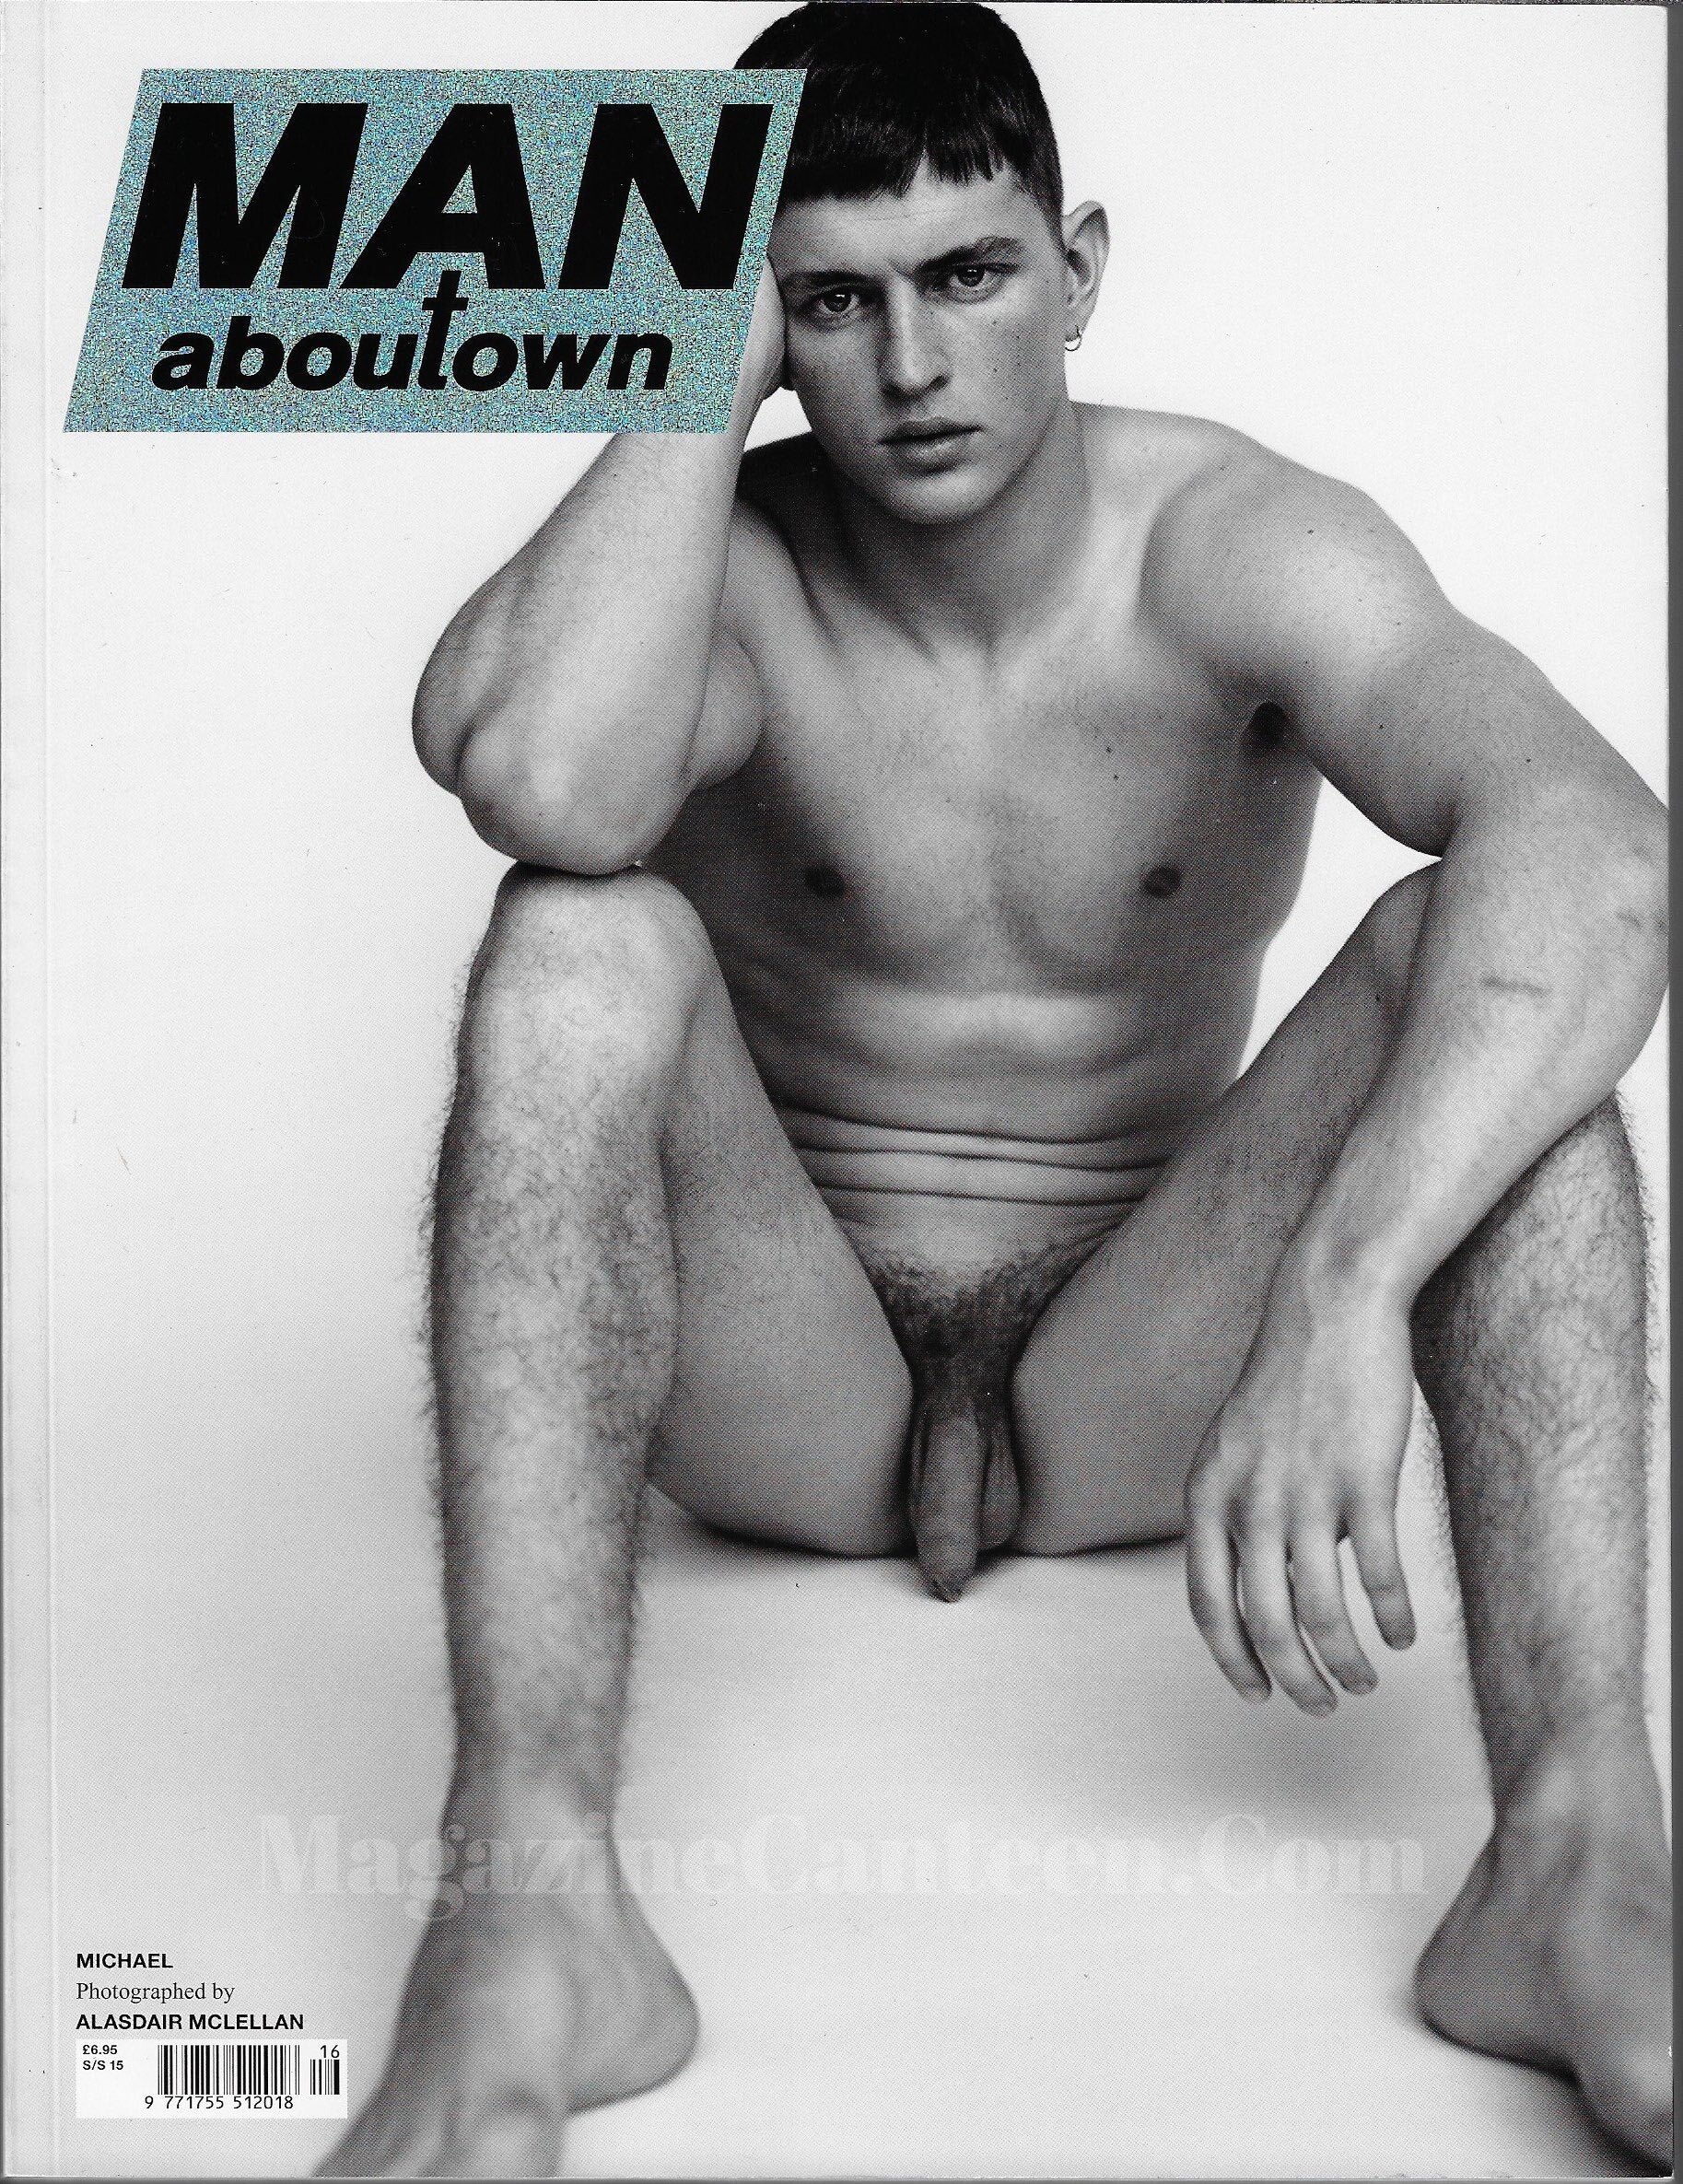  Man About Town Magazine - Matthew Alasdair McLellan 2015 naked